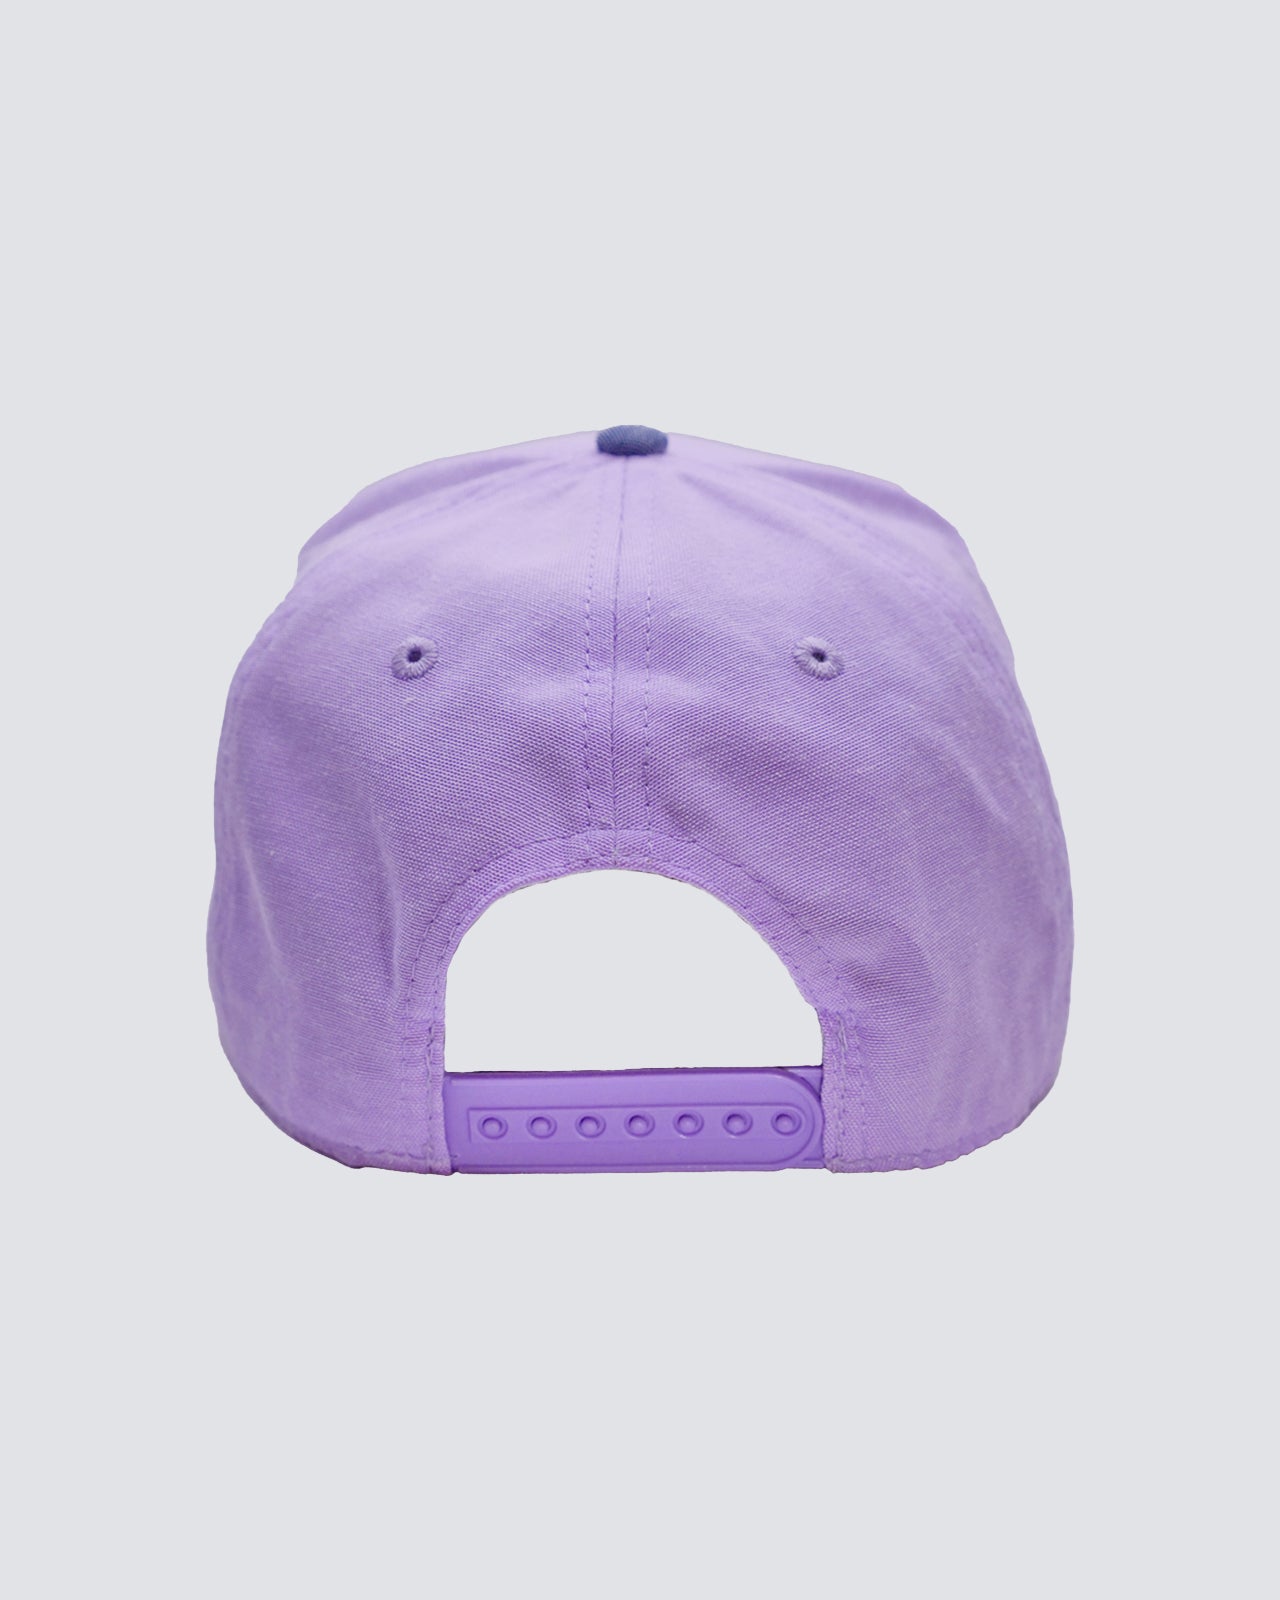 NYC Felt Font 5 Panel Hat in Purple